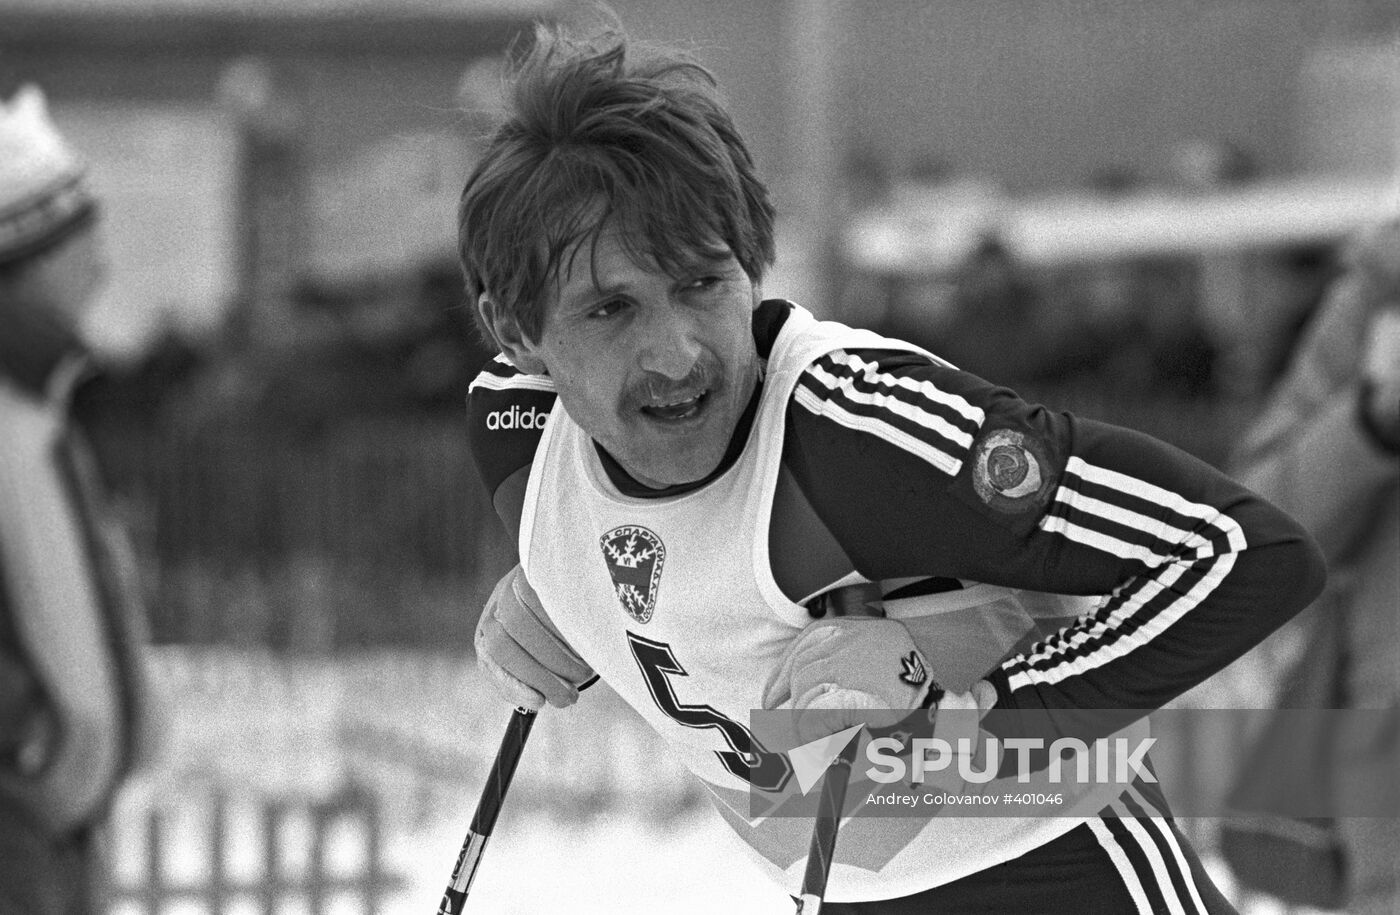 Member of USSR national skiing team Vladimir Sakhnov